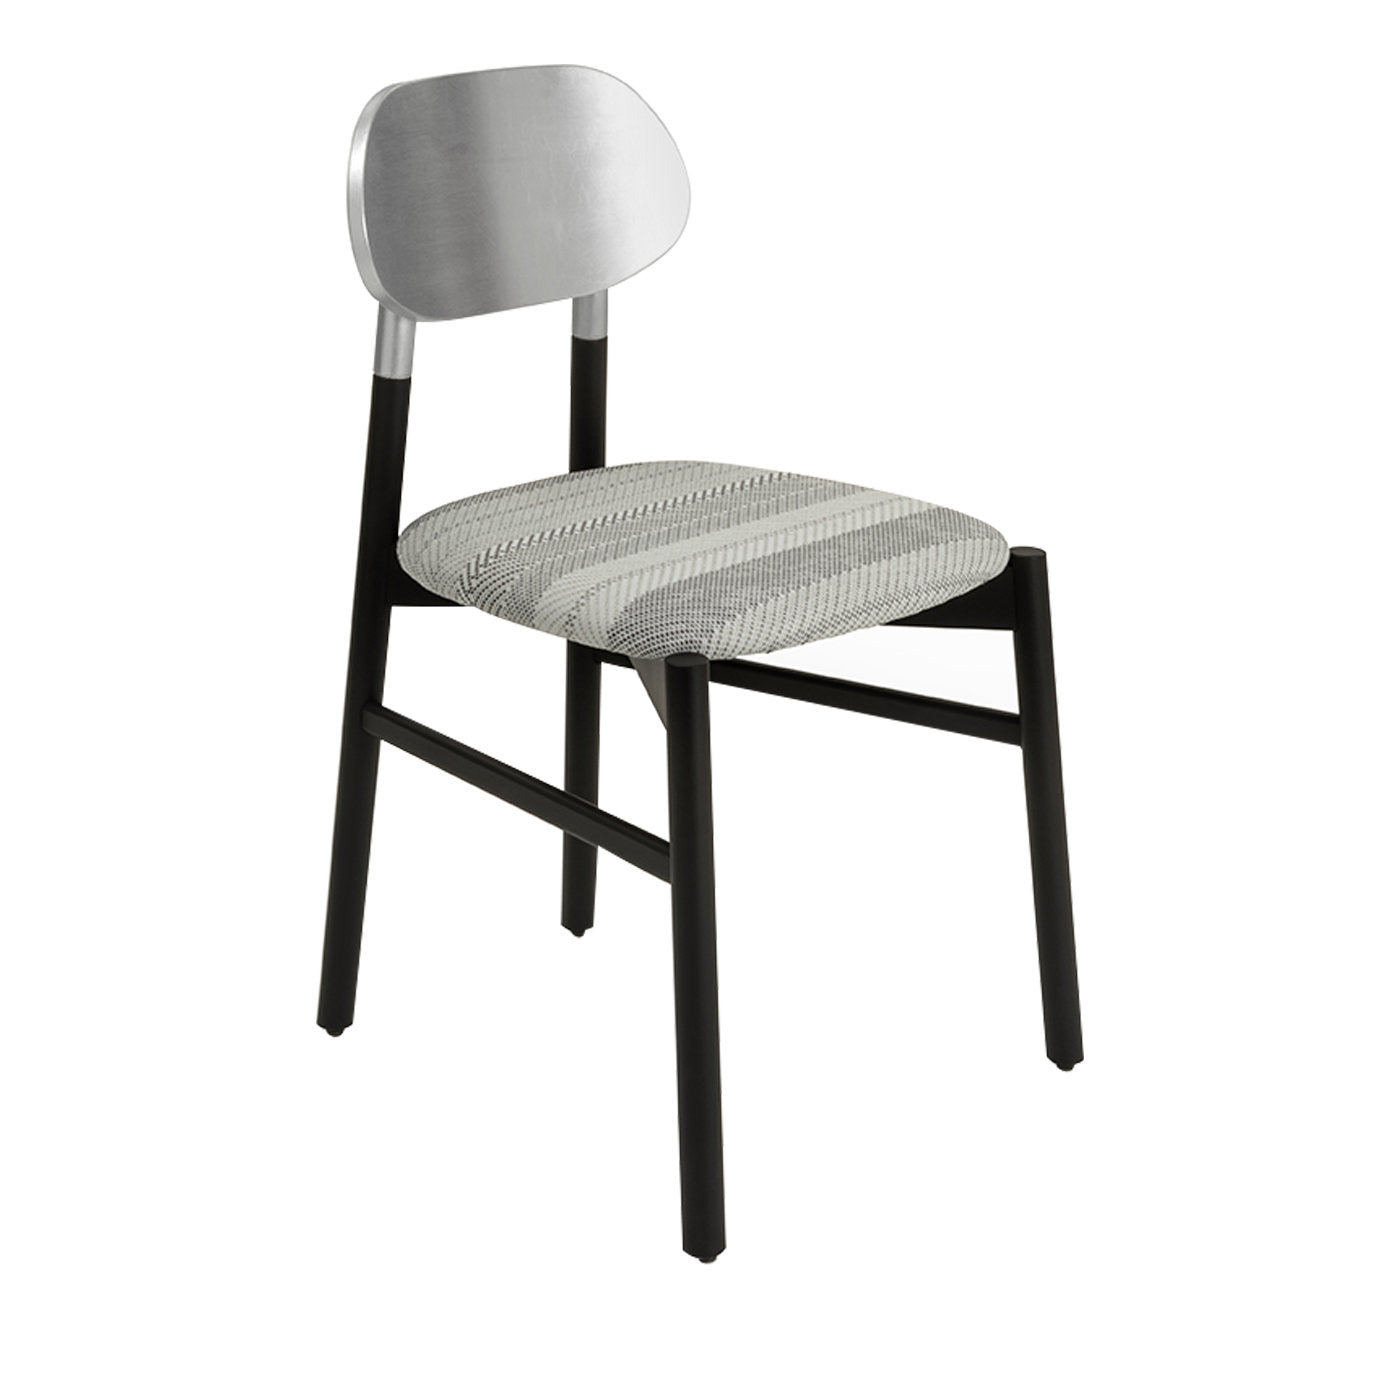 Bokken Silver and Black/White Chair by Bellavista & Piccini - Main view